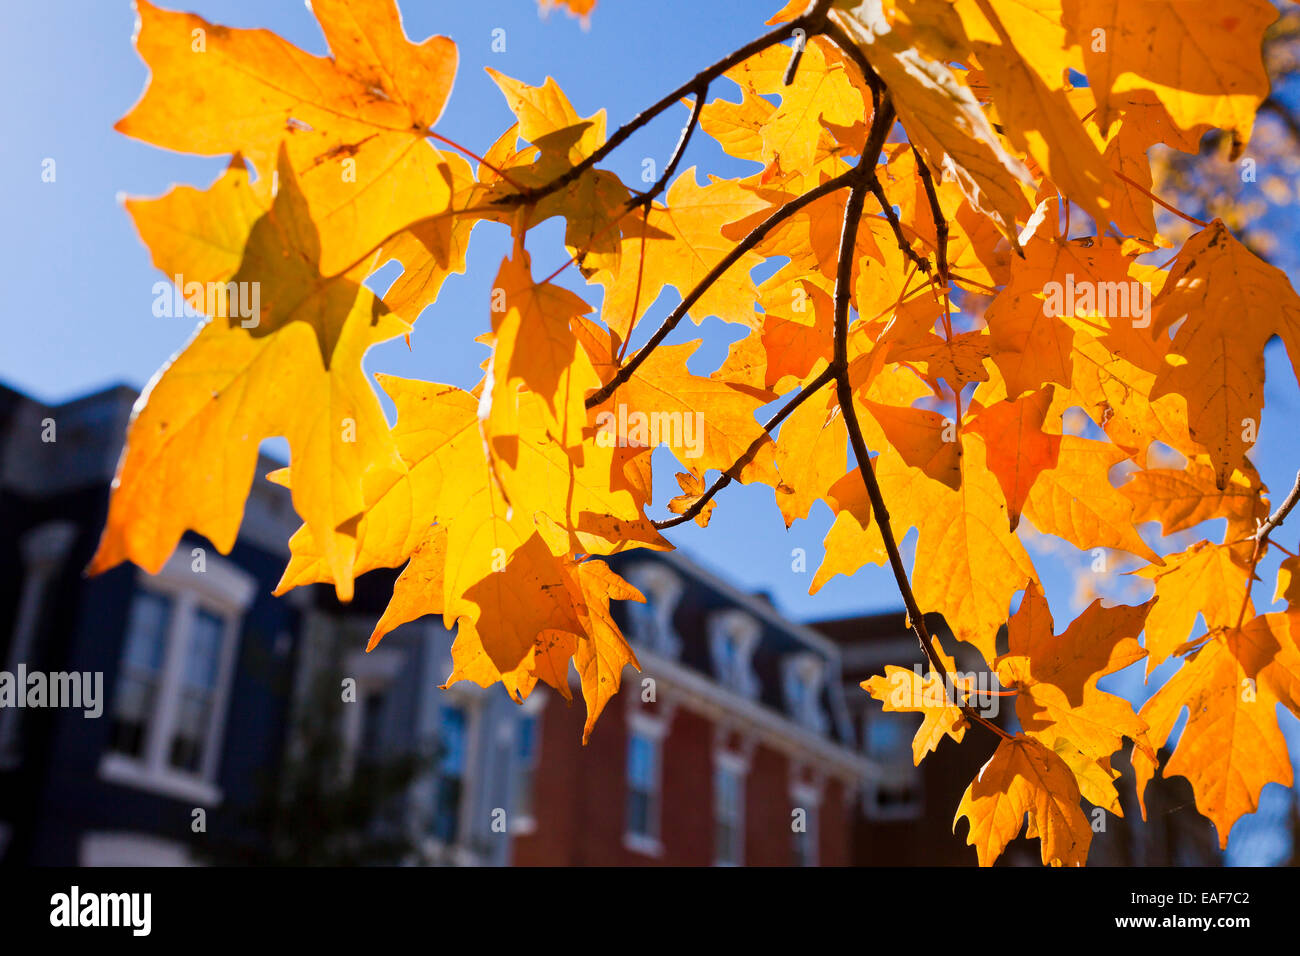 Fall foliage against townhouses - USA Stock Photo